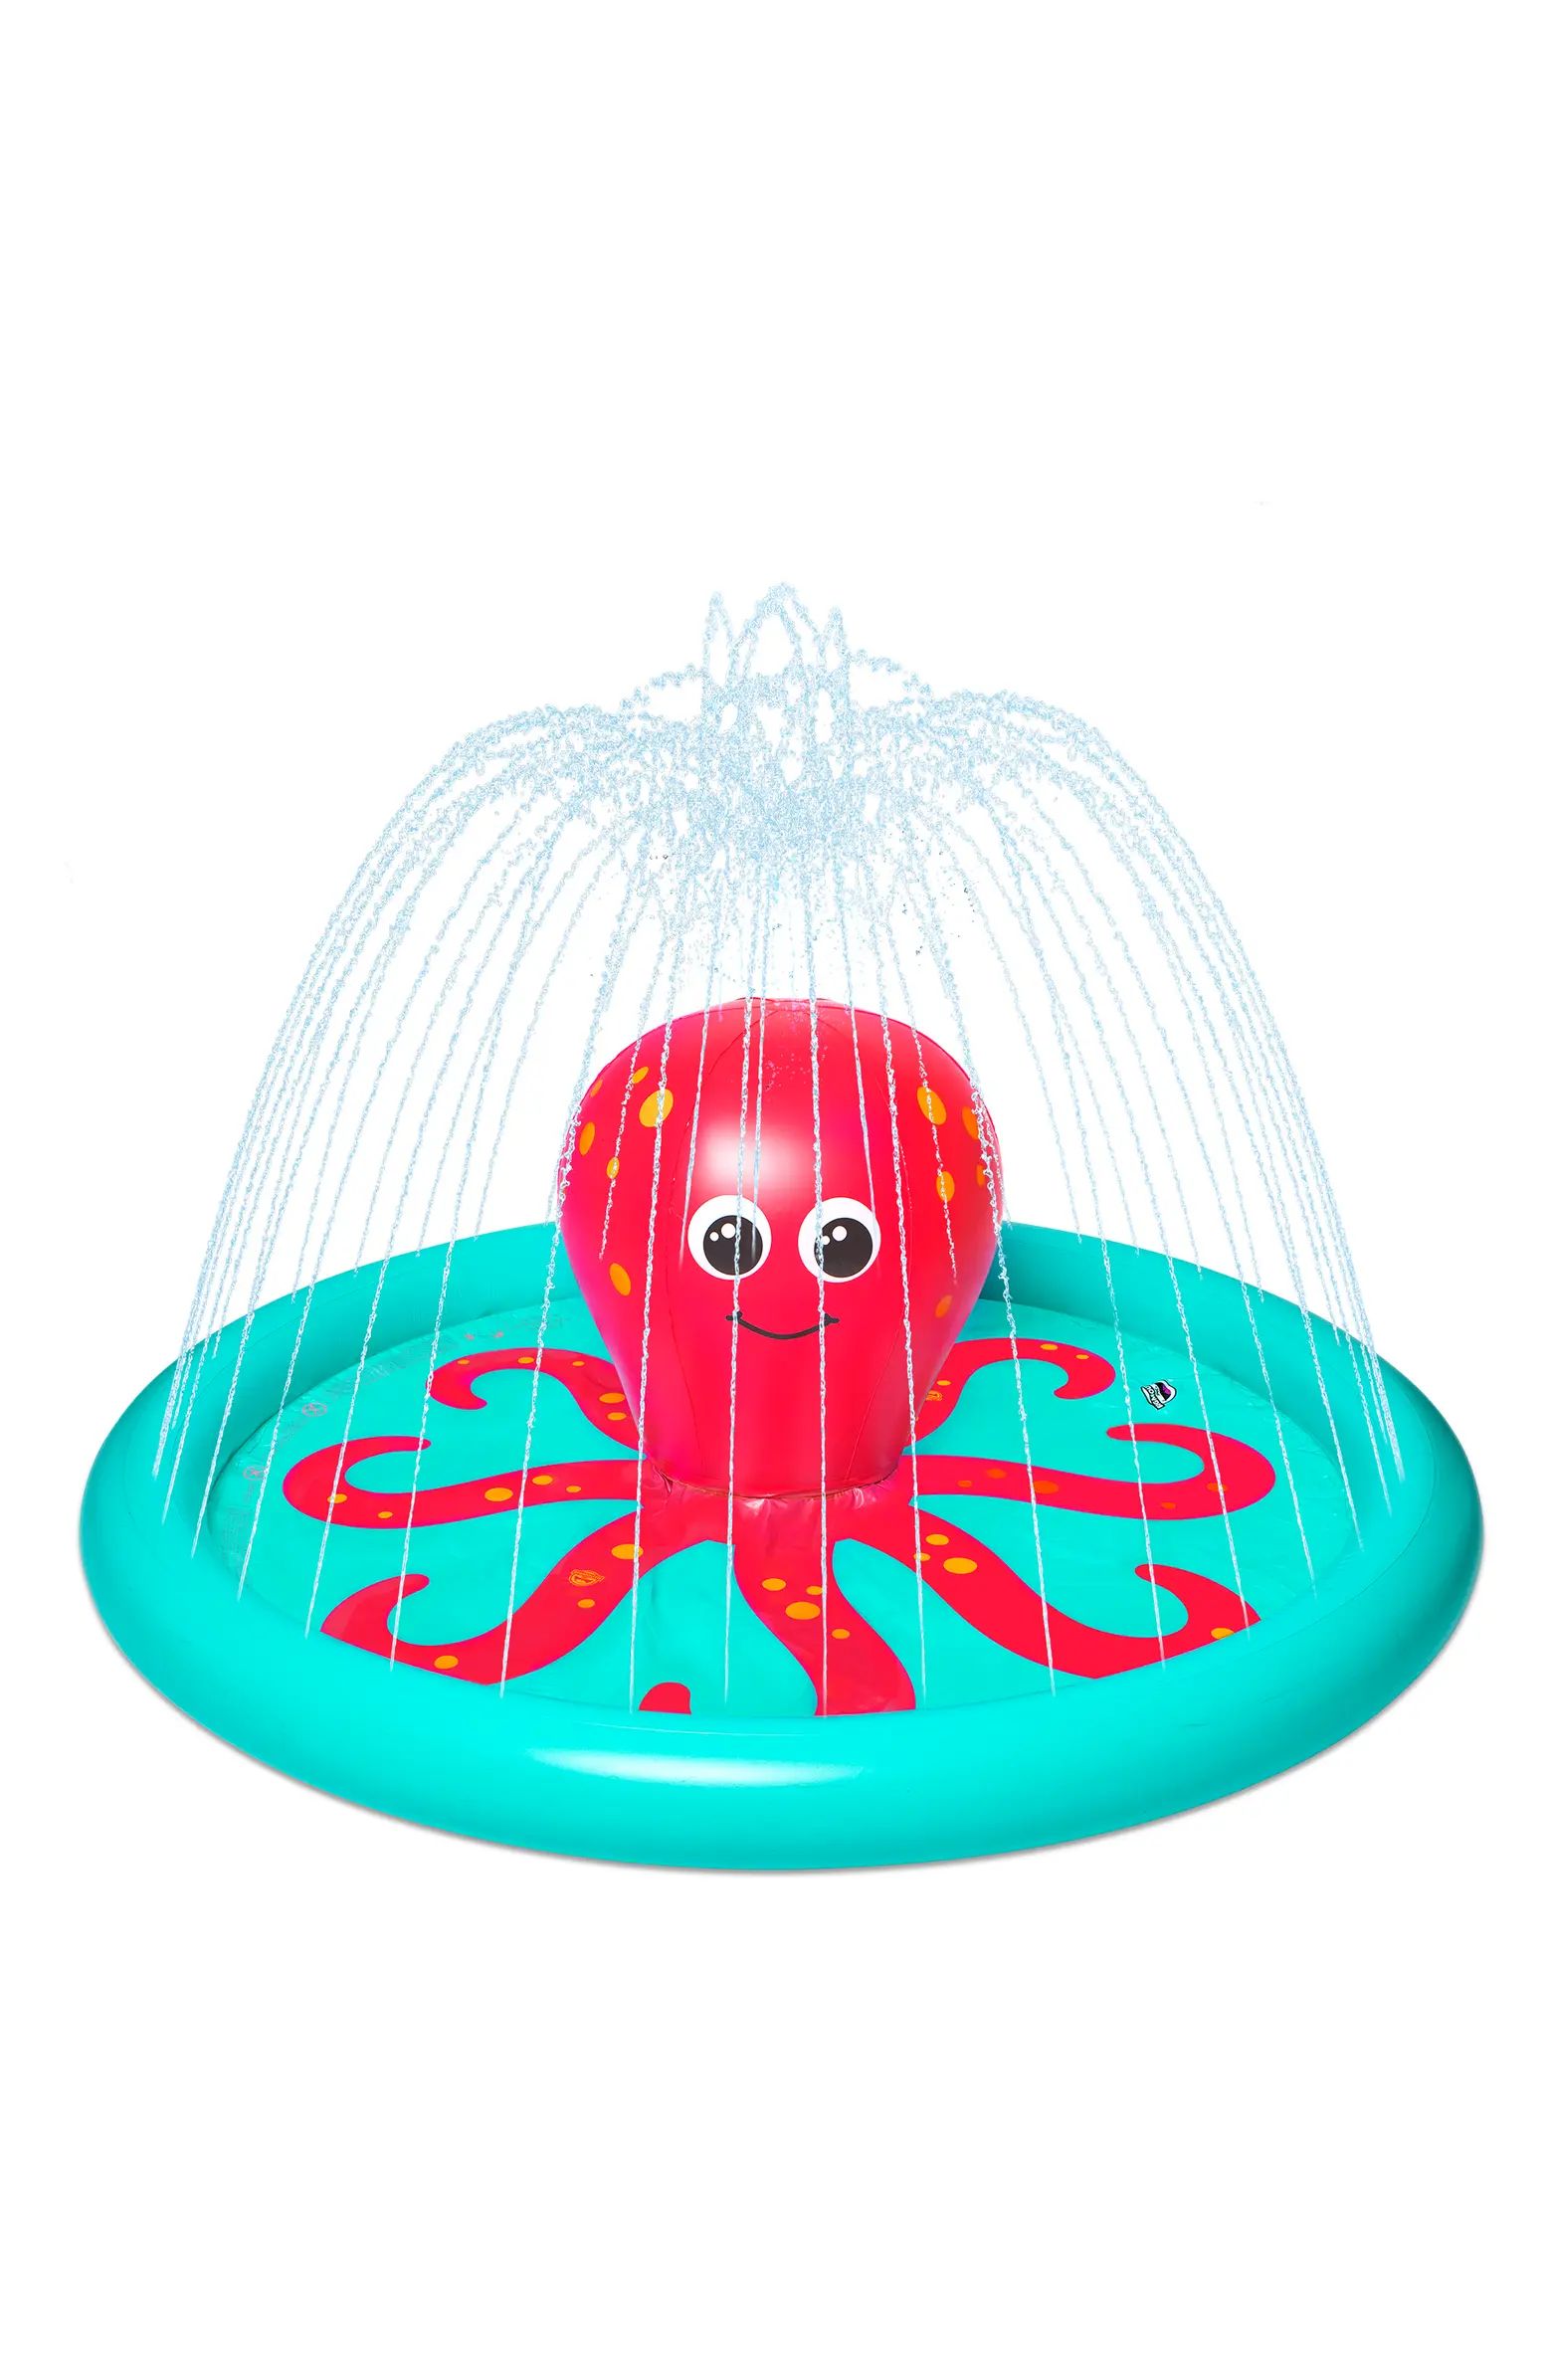 Octopus Splash Pad | Nordstrom